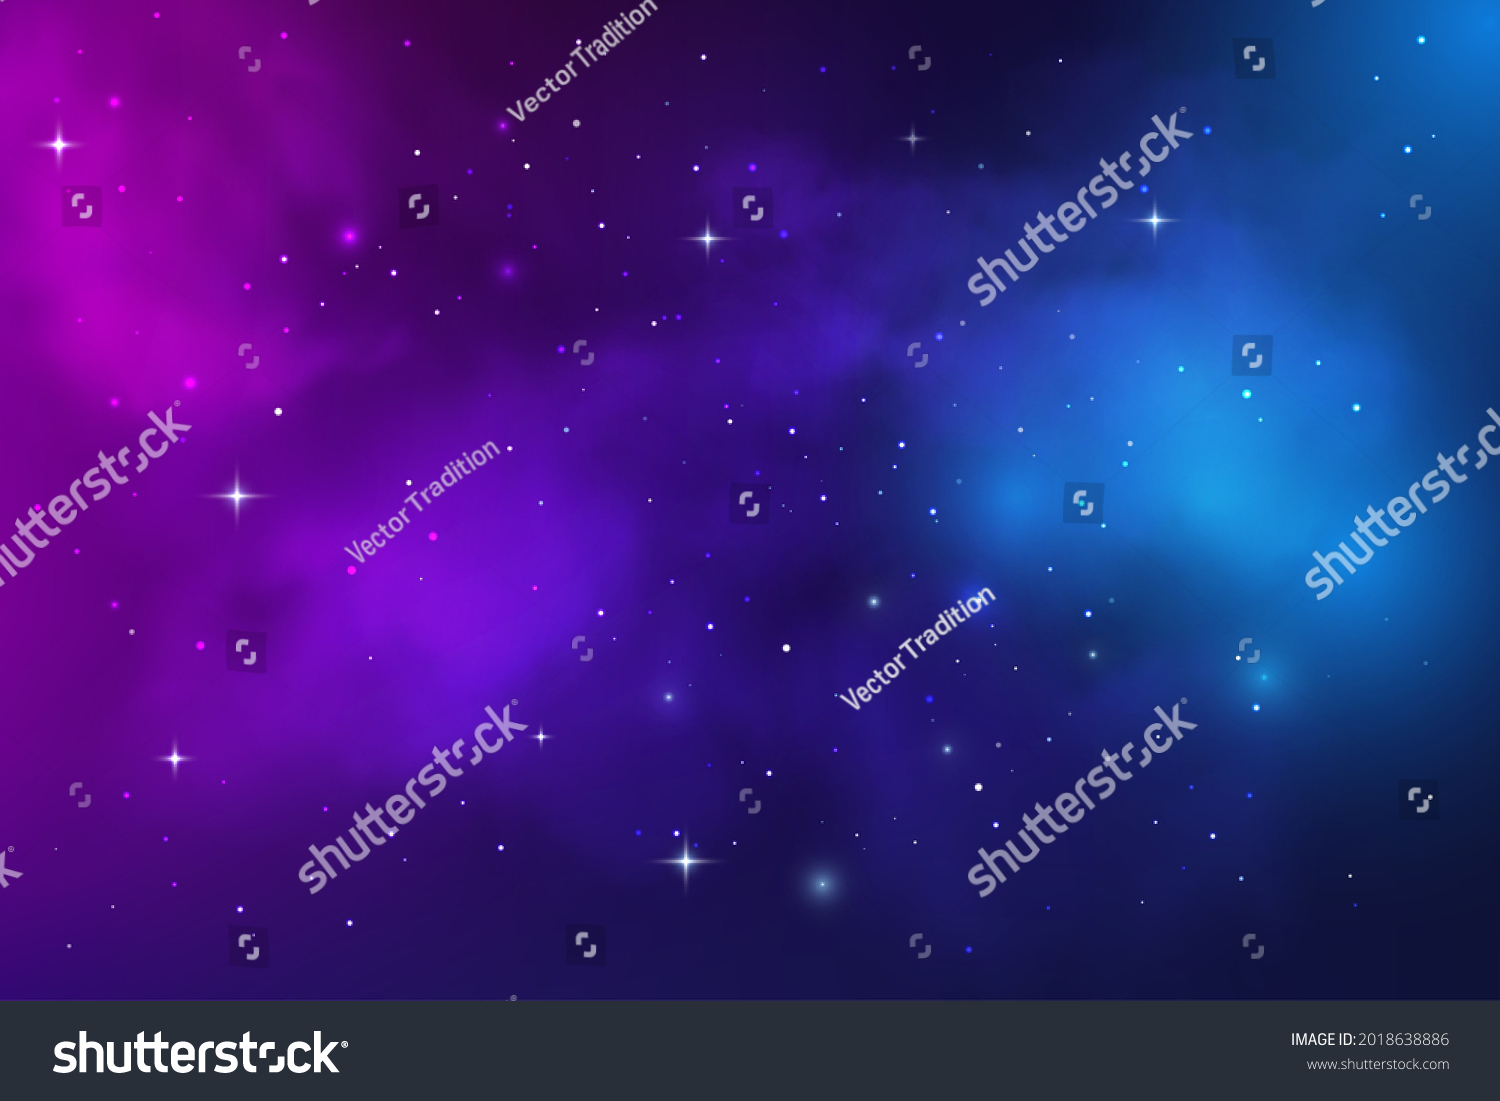 117,701 Night blue purple sky Images, Stock Photos & Vectors | Shutterstock